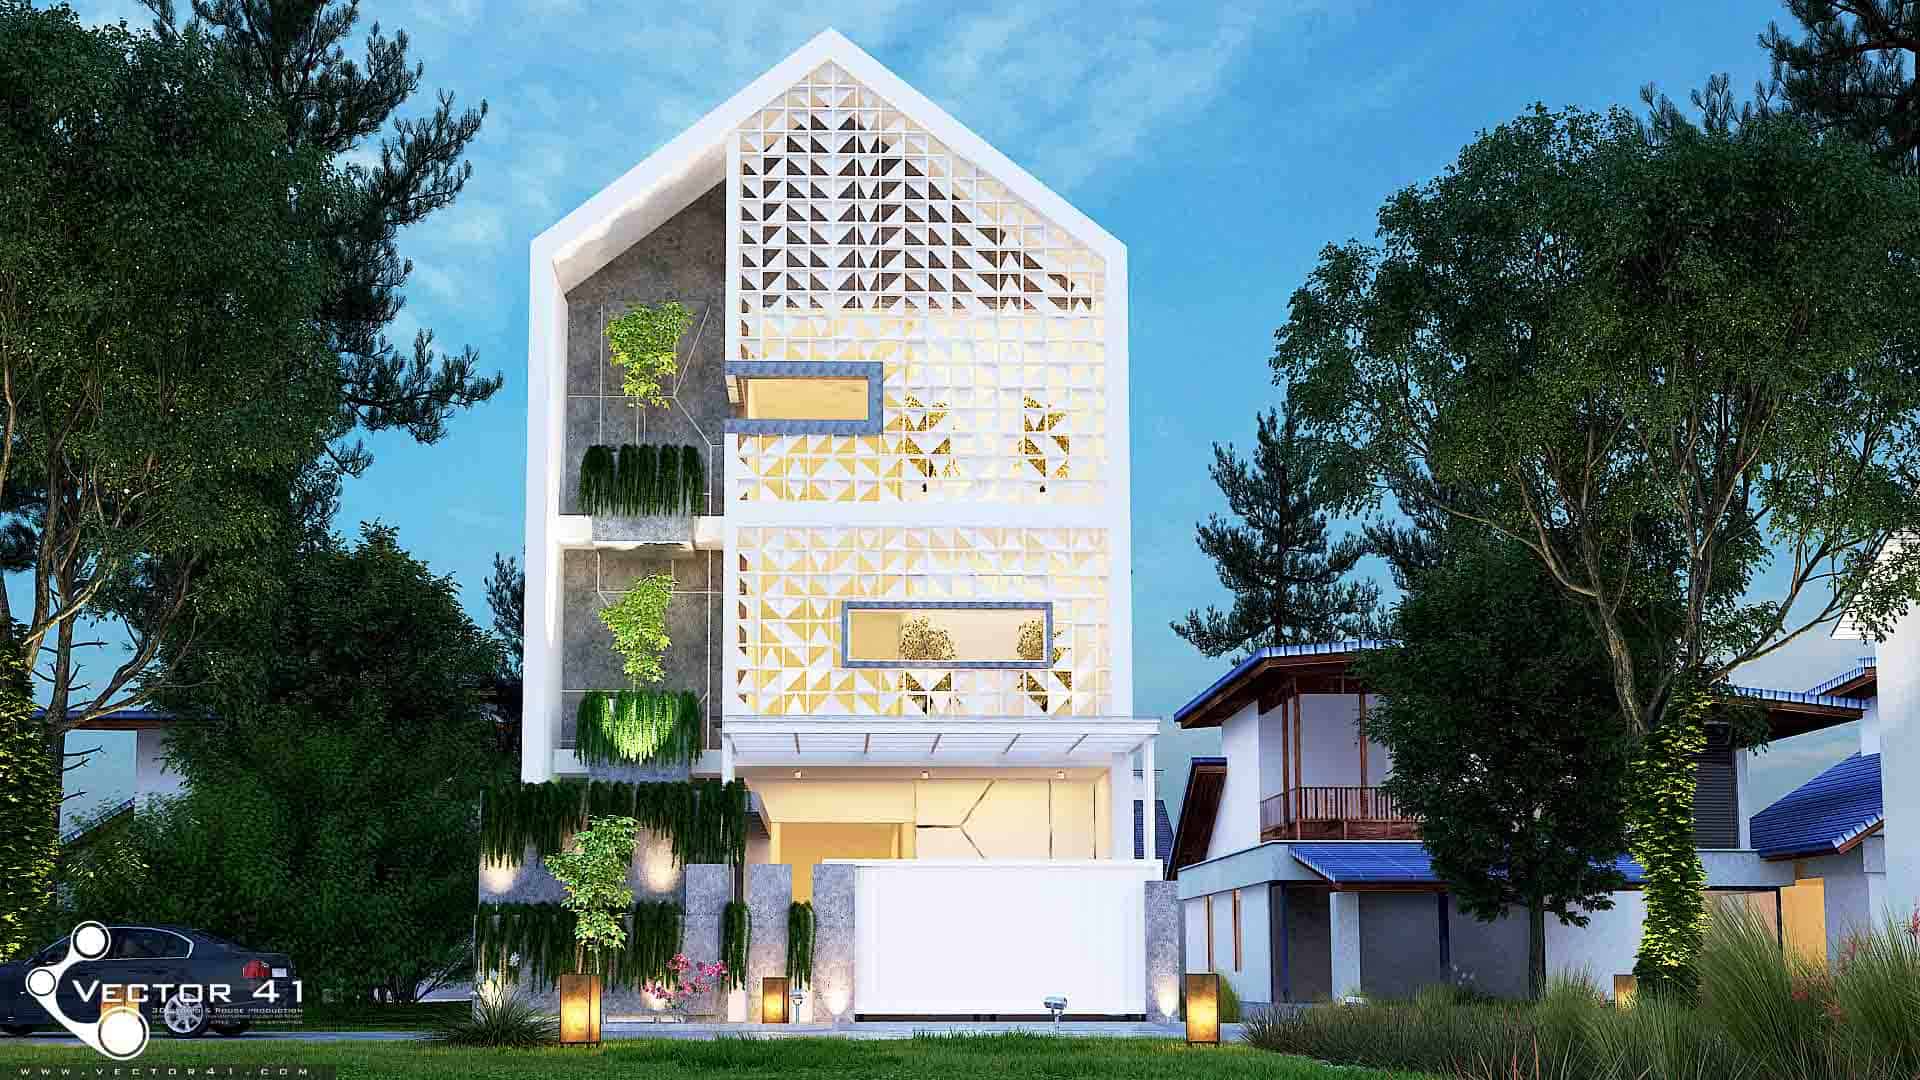 Desain Kos Kosan Mrsnauling Medan Vector 41 Arsitek